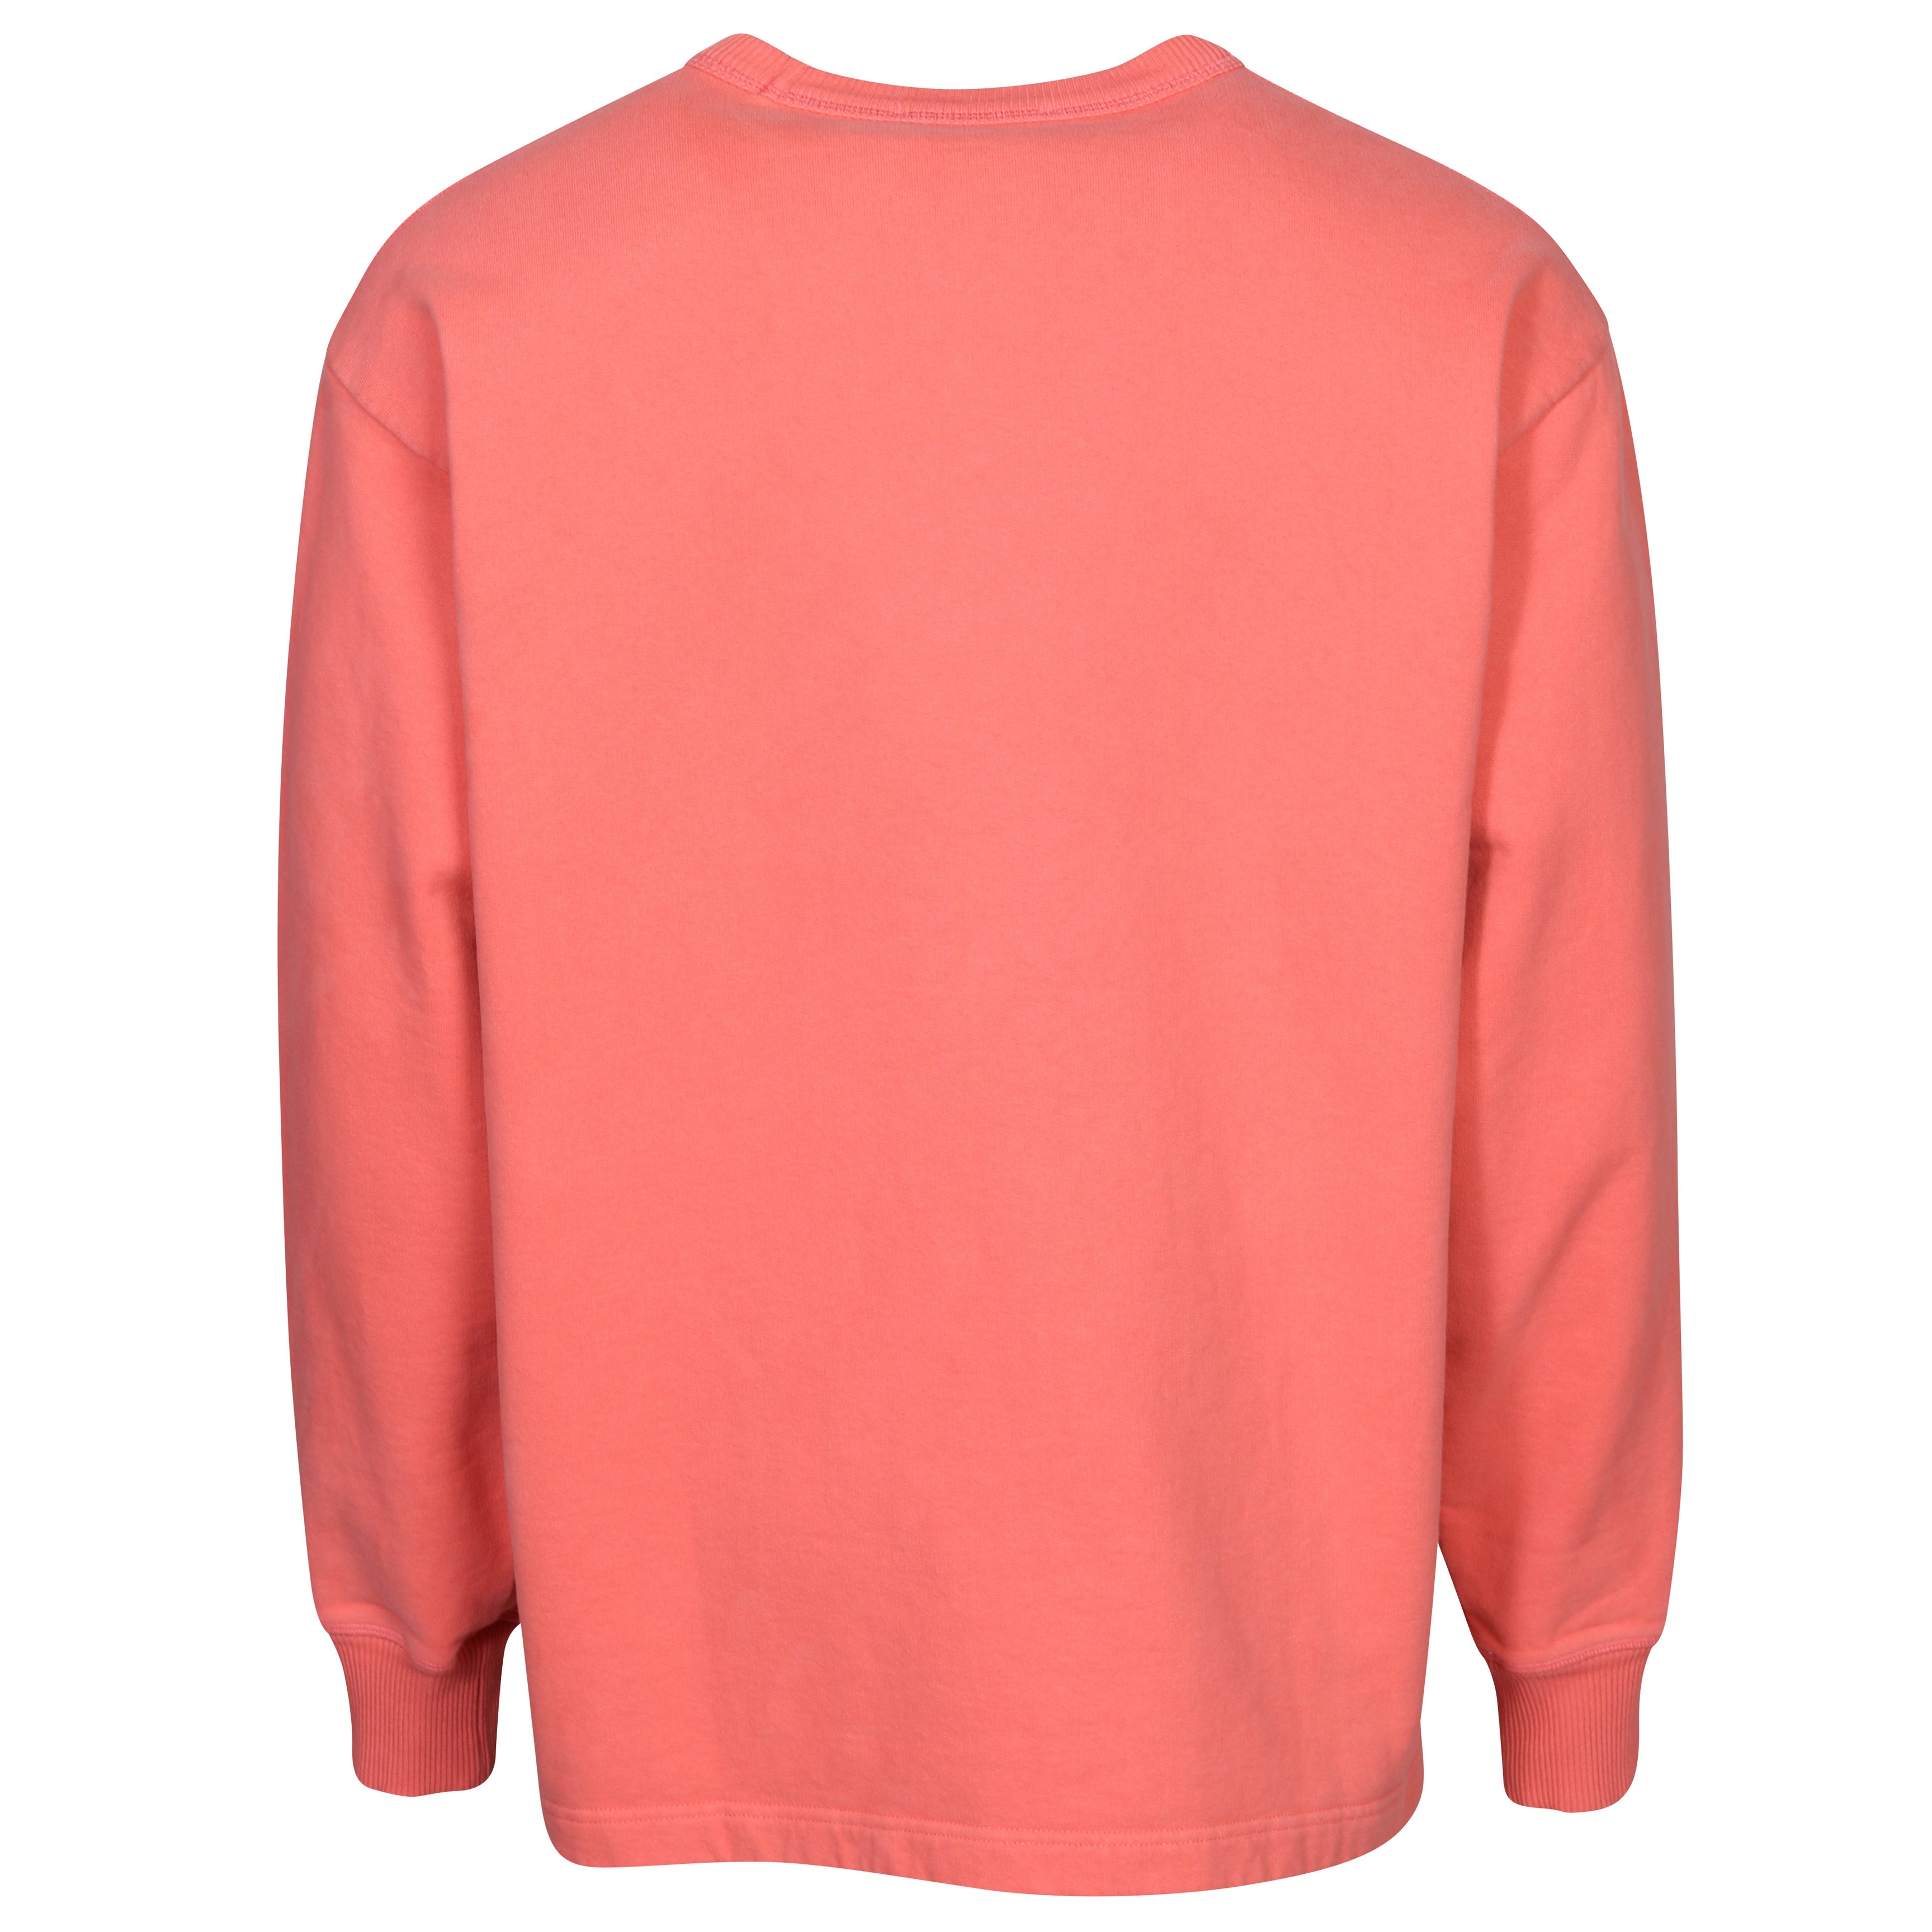 Acne Studios Stamp Sweatshirt in Salmon Pink